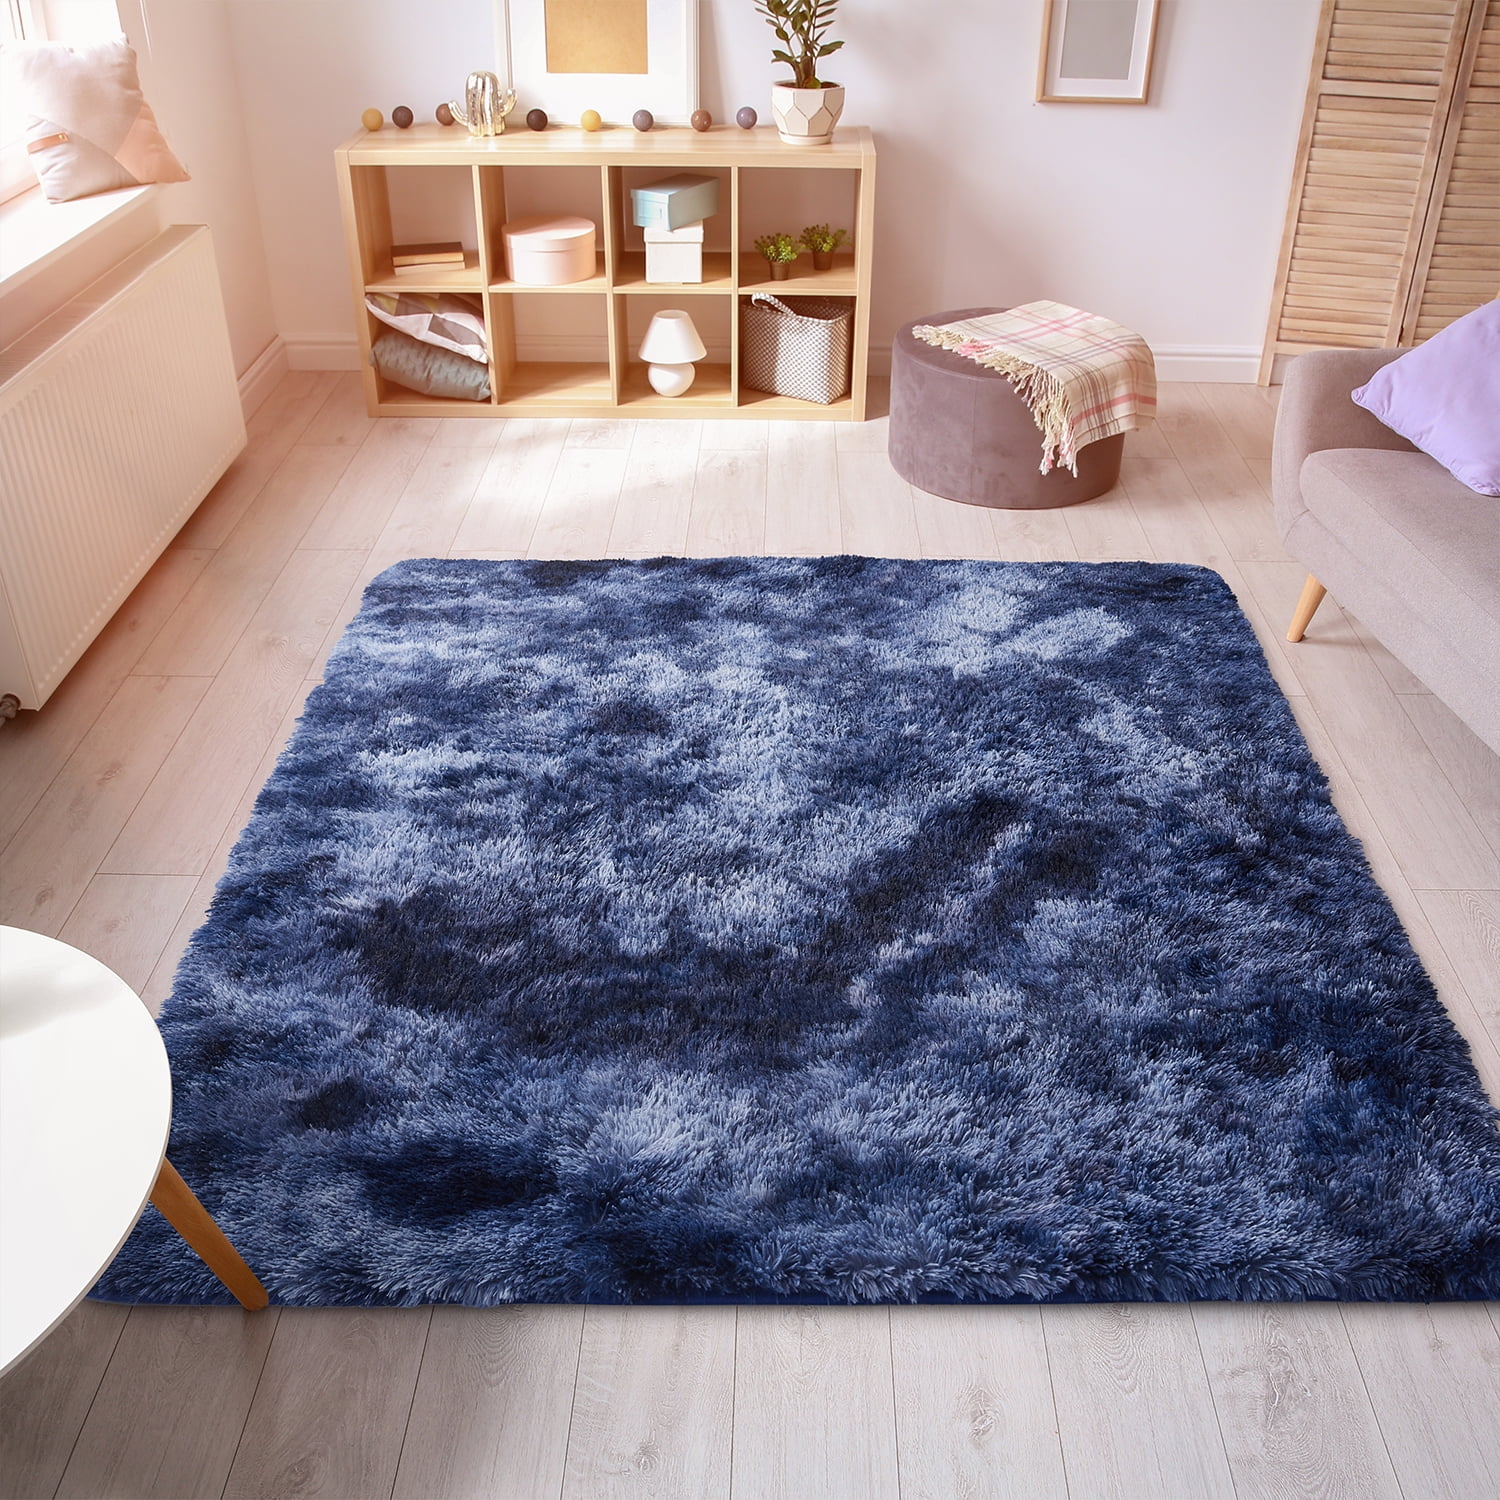 Merryhome Soft Plush Faux Fur Area Rug 4x6 Feet, Luxury Modern Rugs Rectangular Fuzzy Carpet for Bedroom, Living Room, Kids Room, Black